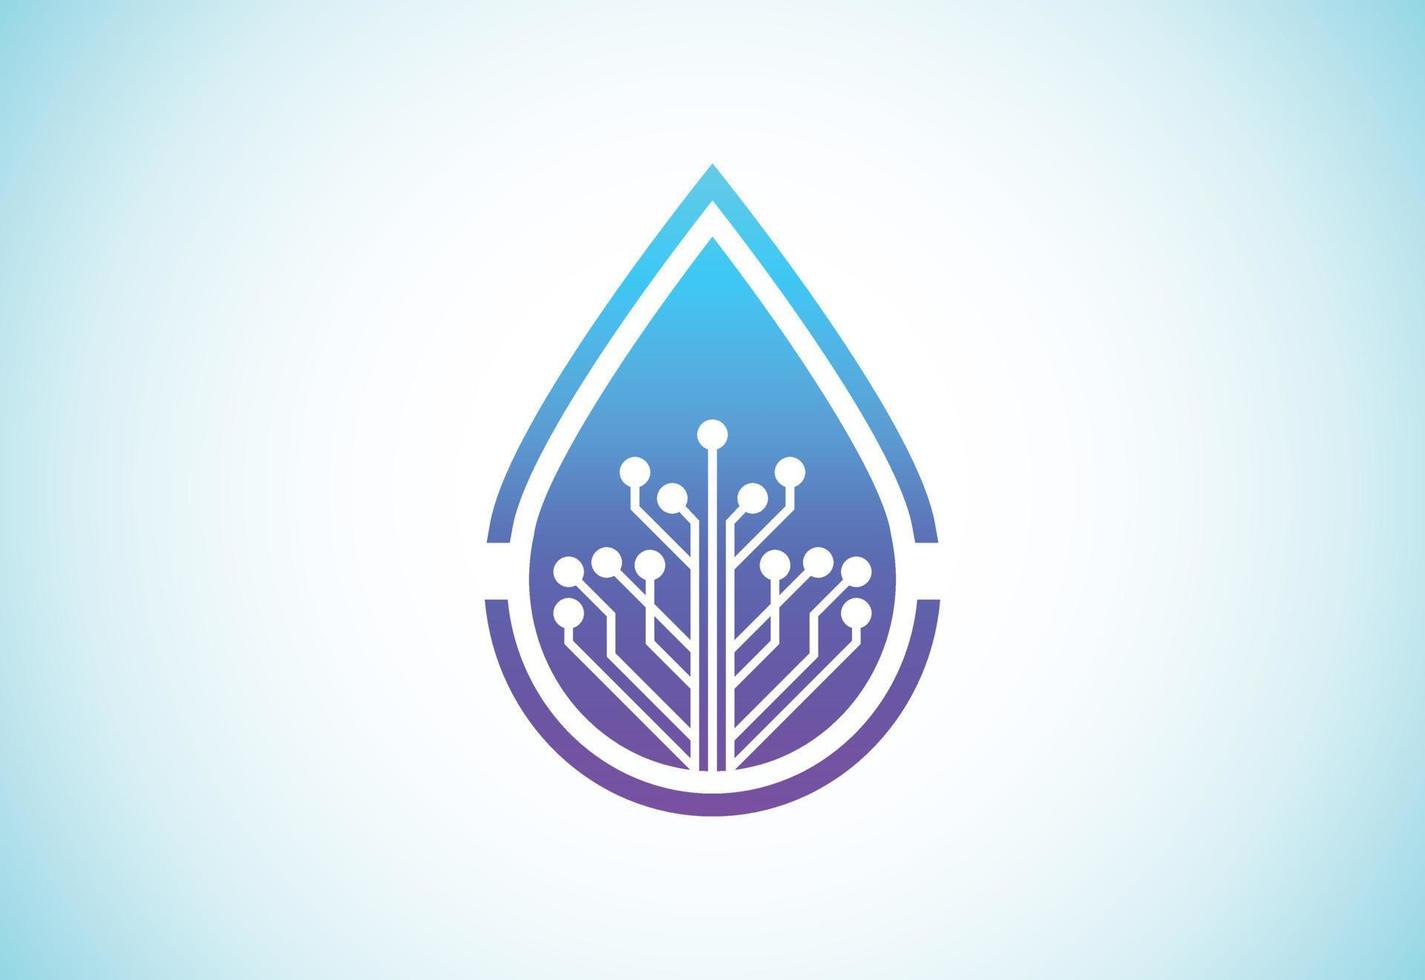 símbolo de signo de logotipo de gota de agua abstracto sobre fondo blanco, plantilla de diseño de logotipo de gota de agua. vector